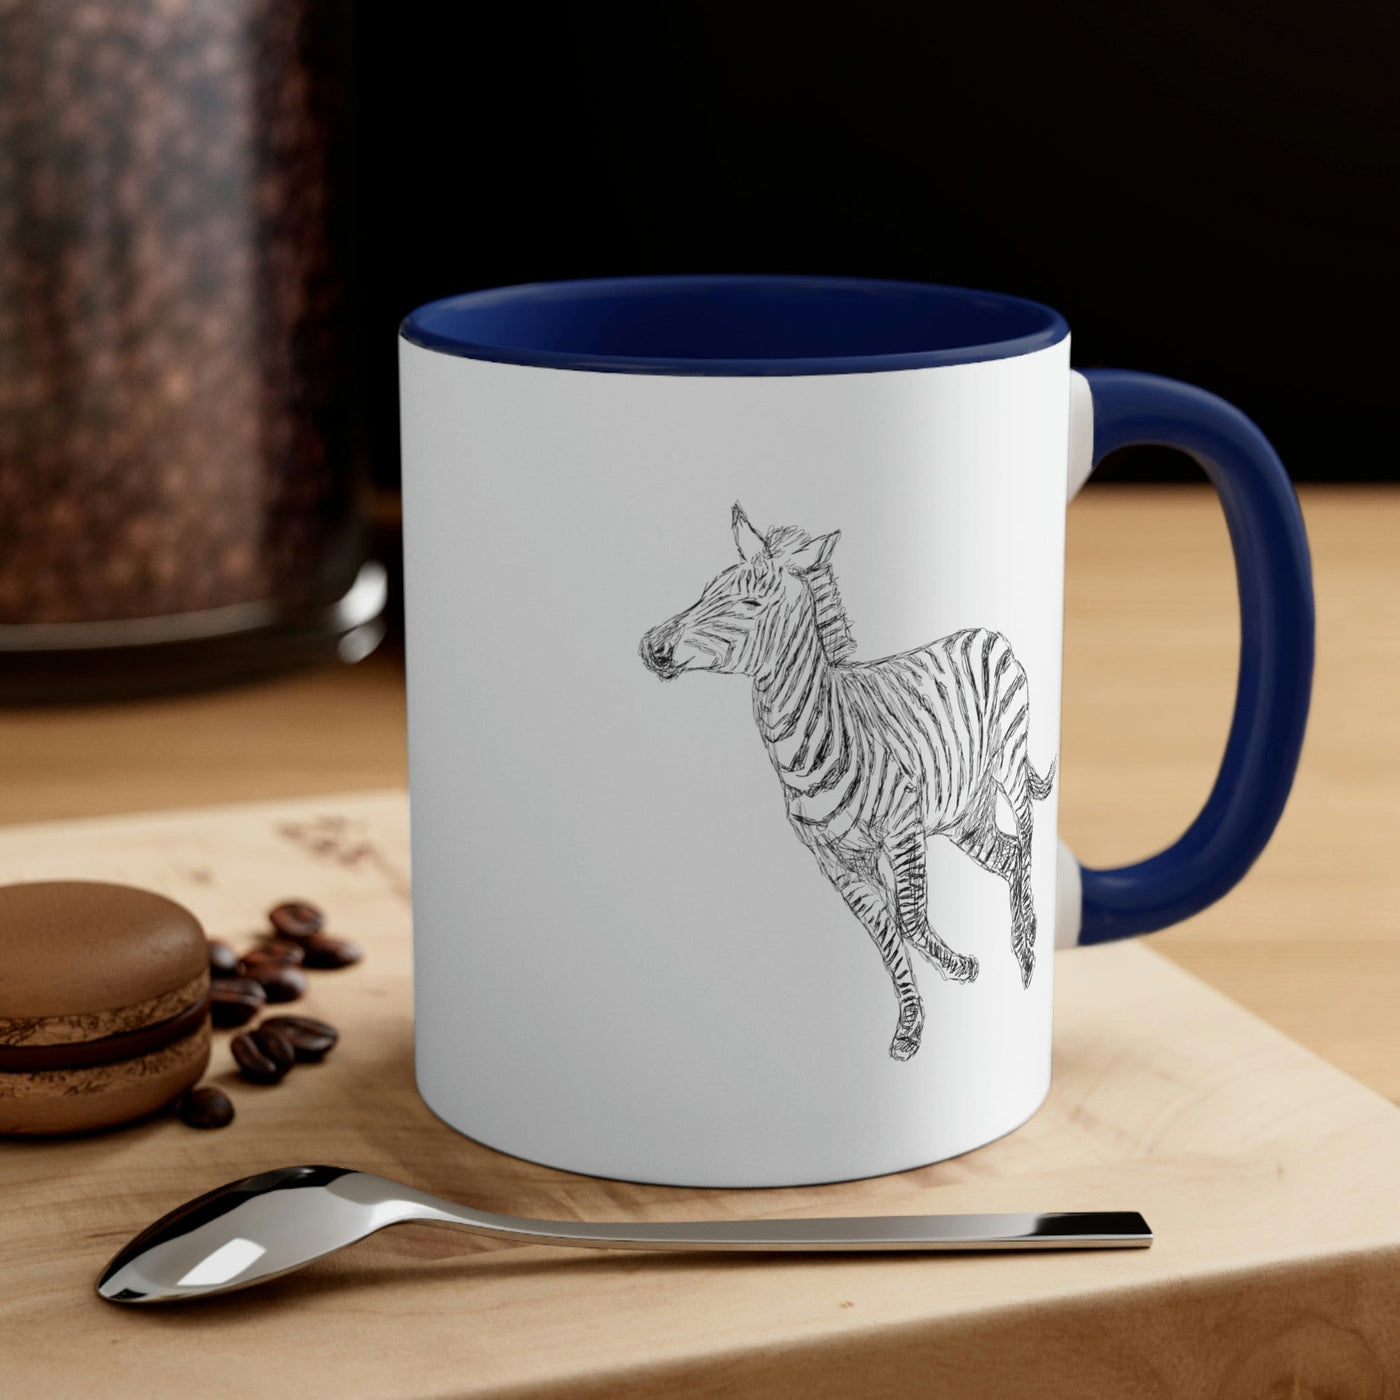 Two-tone Accent Ceramic Mug 11oz Galloping Zebra Line Art Drawing Print